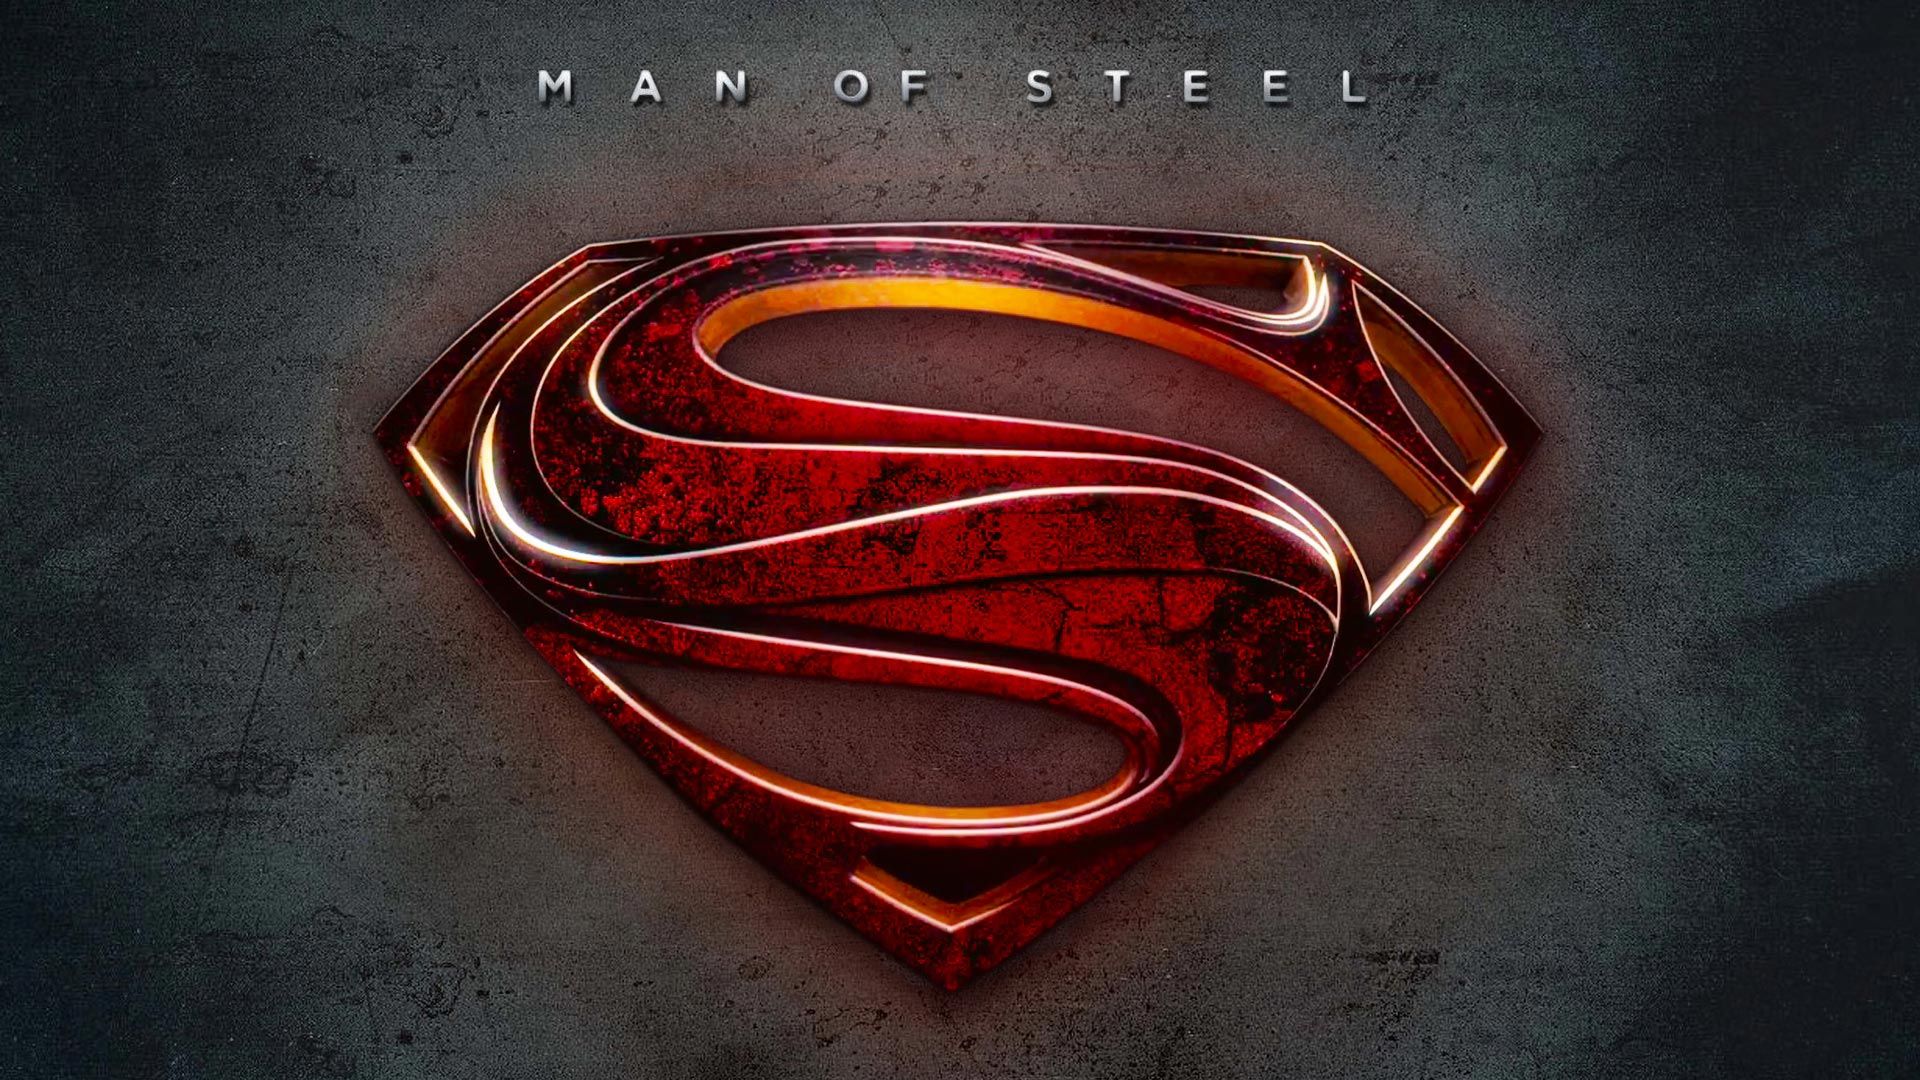 Superman Man of Steel Logo Wallpaper High Quality 131 - HD ...